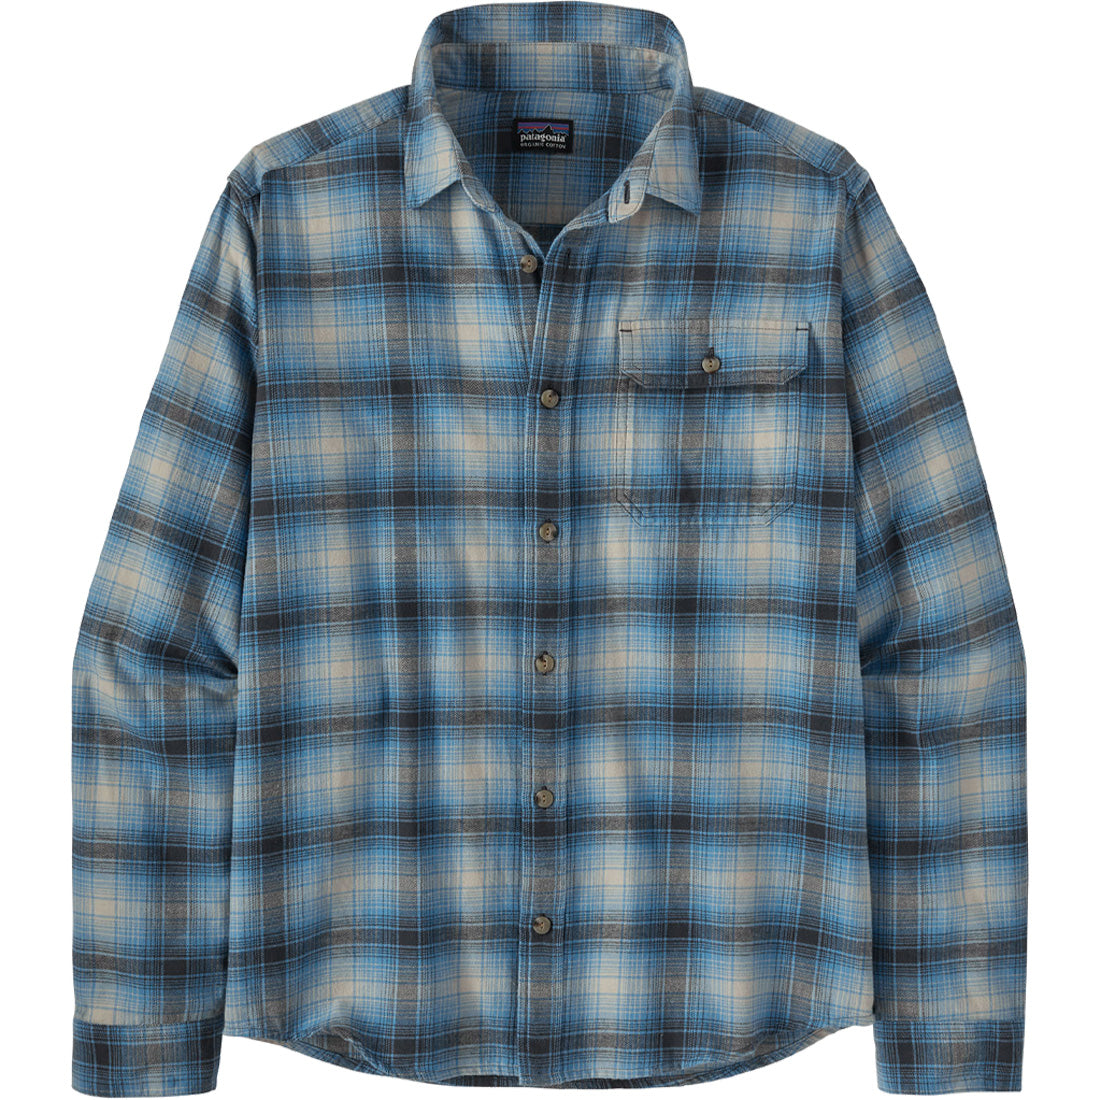 Patagonia Lightweight Fjord Flannel Shirt - Men's